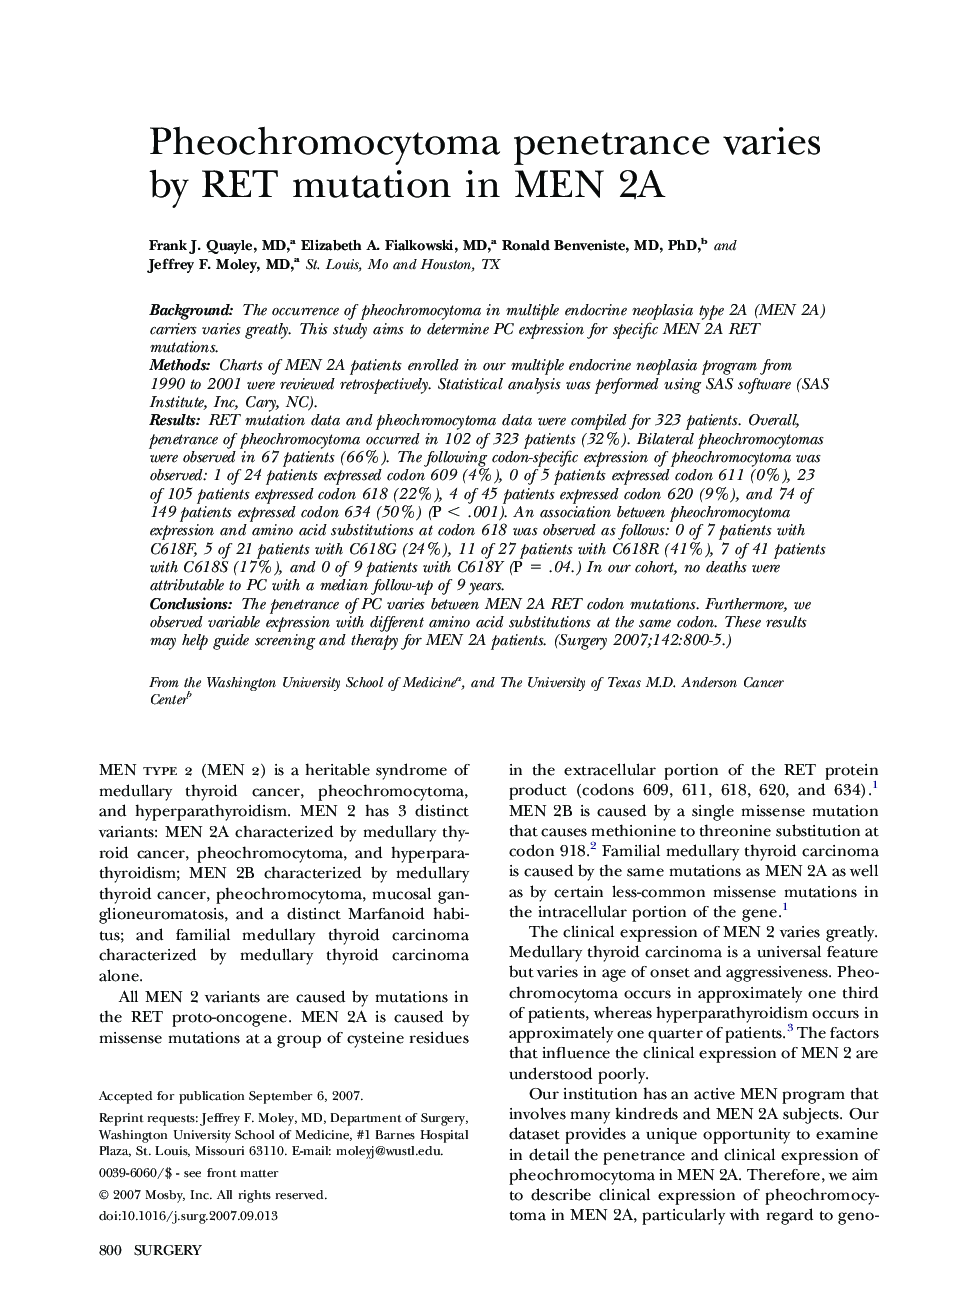 Pheochromocytoma penetrance varies by RET mutation in MEN 2A